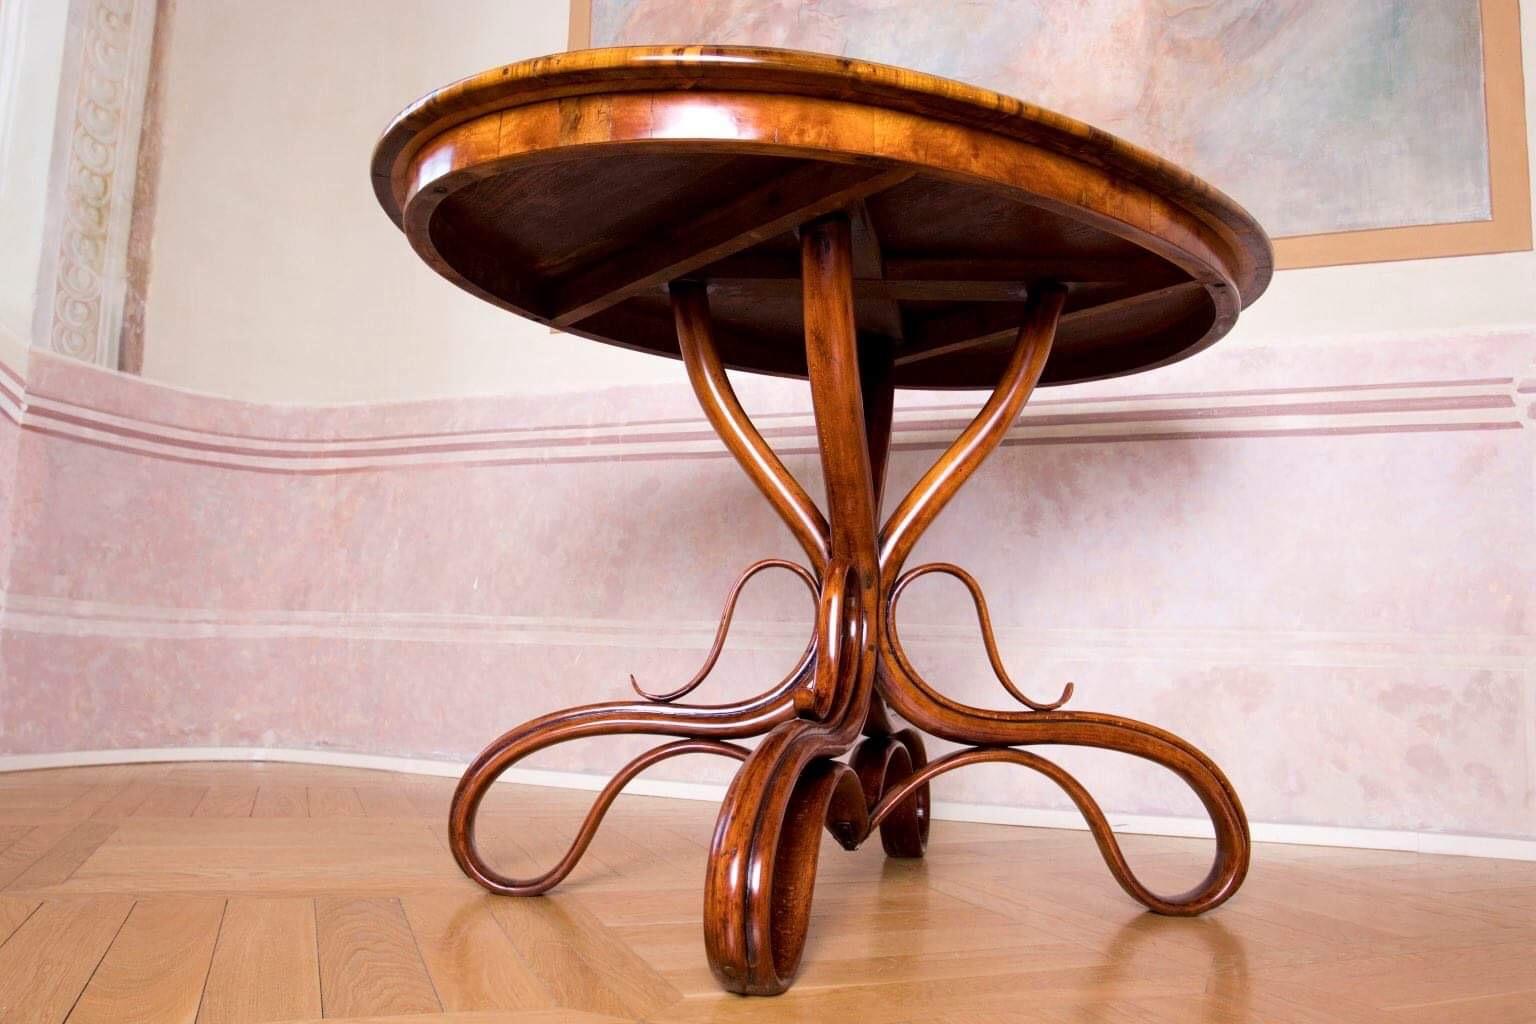 Anodized Beautiful Thonet Restored Table, Art Nouveau, 19th Century For Sale